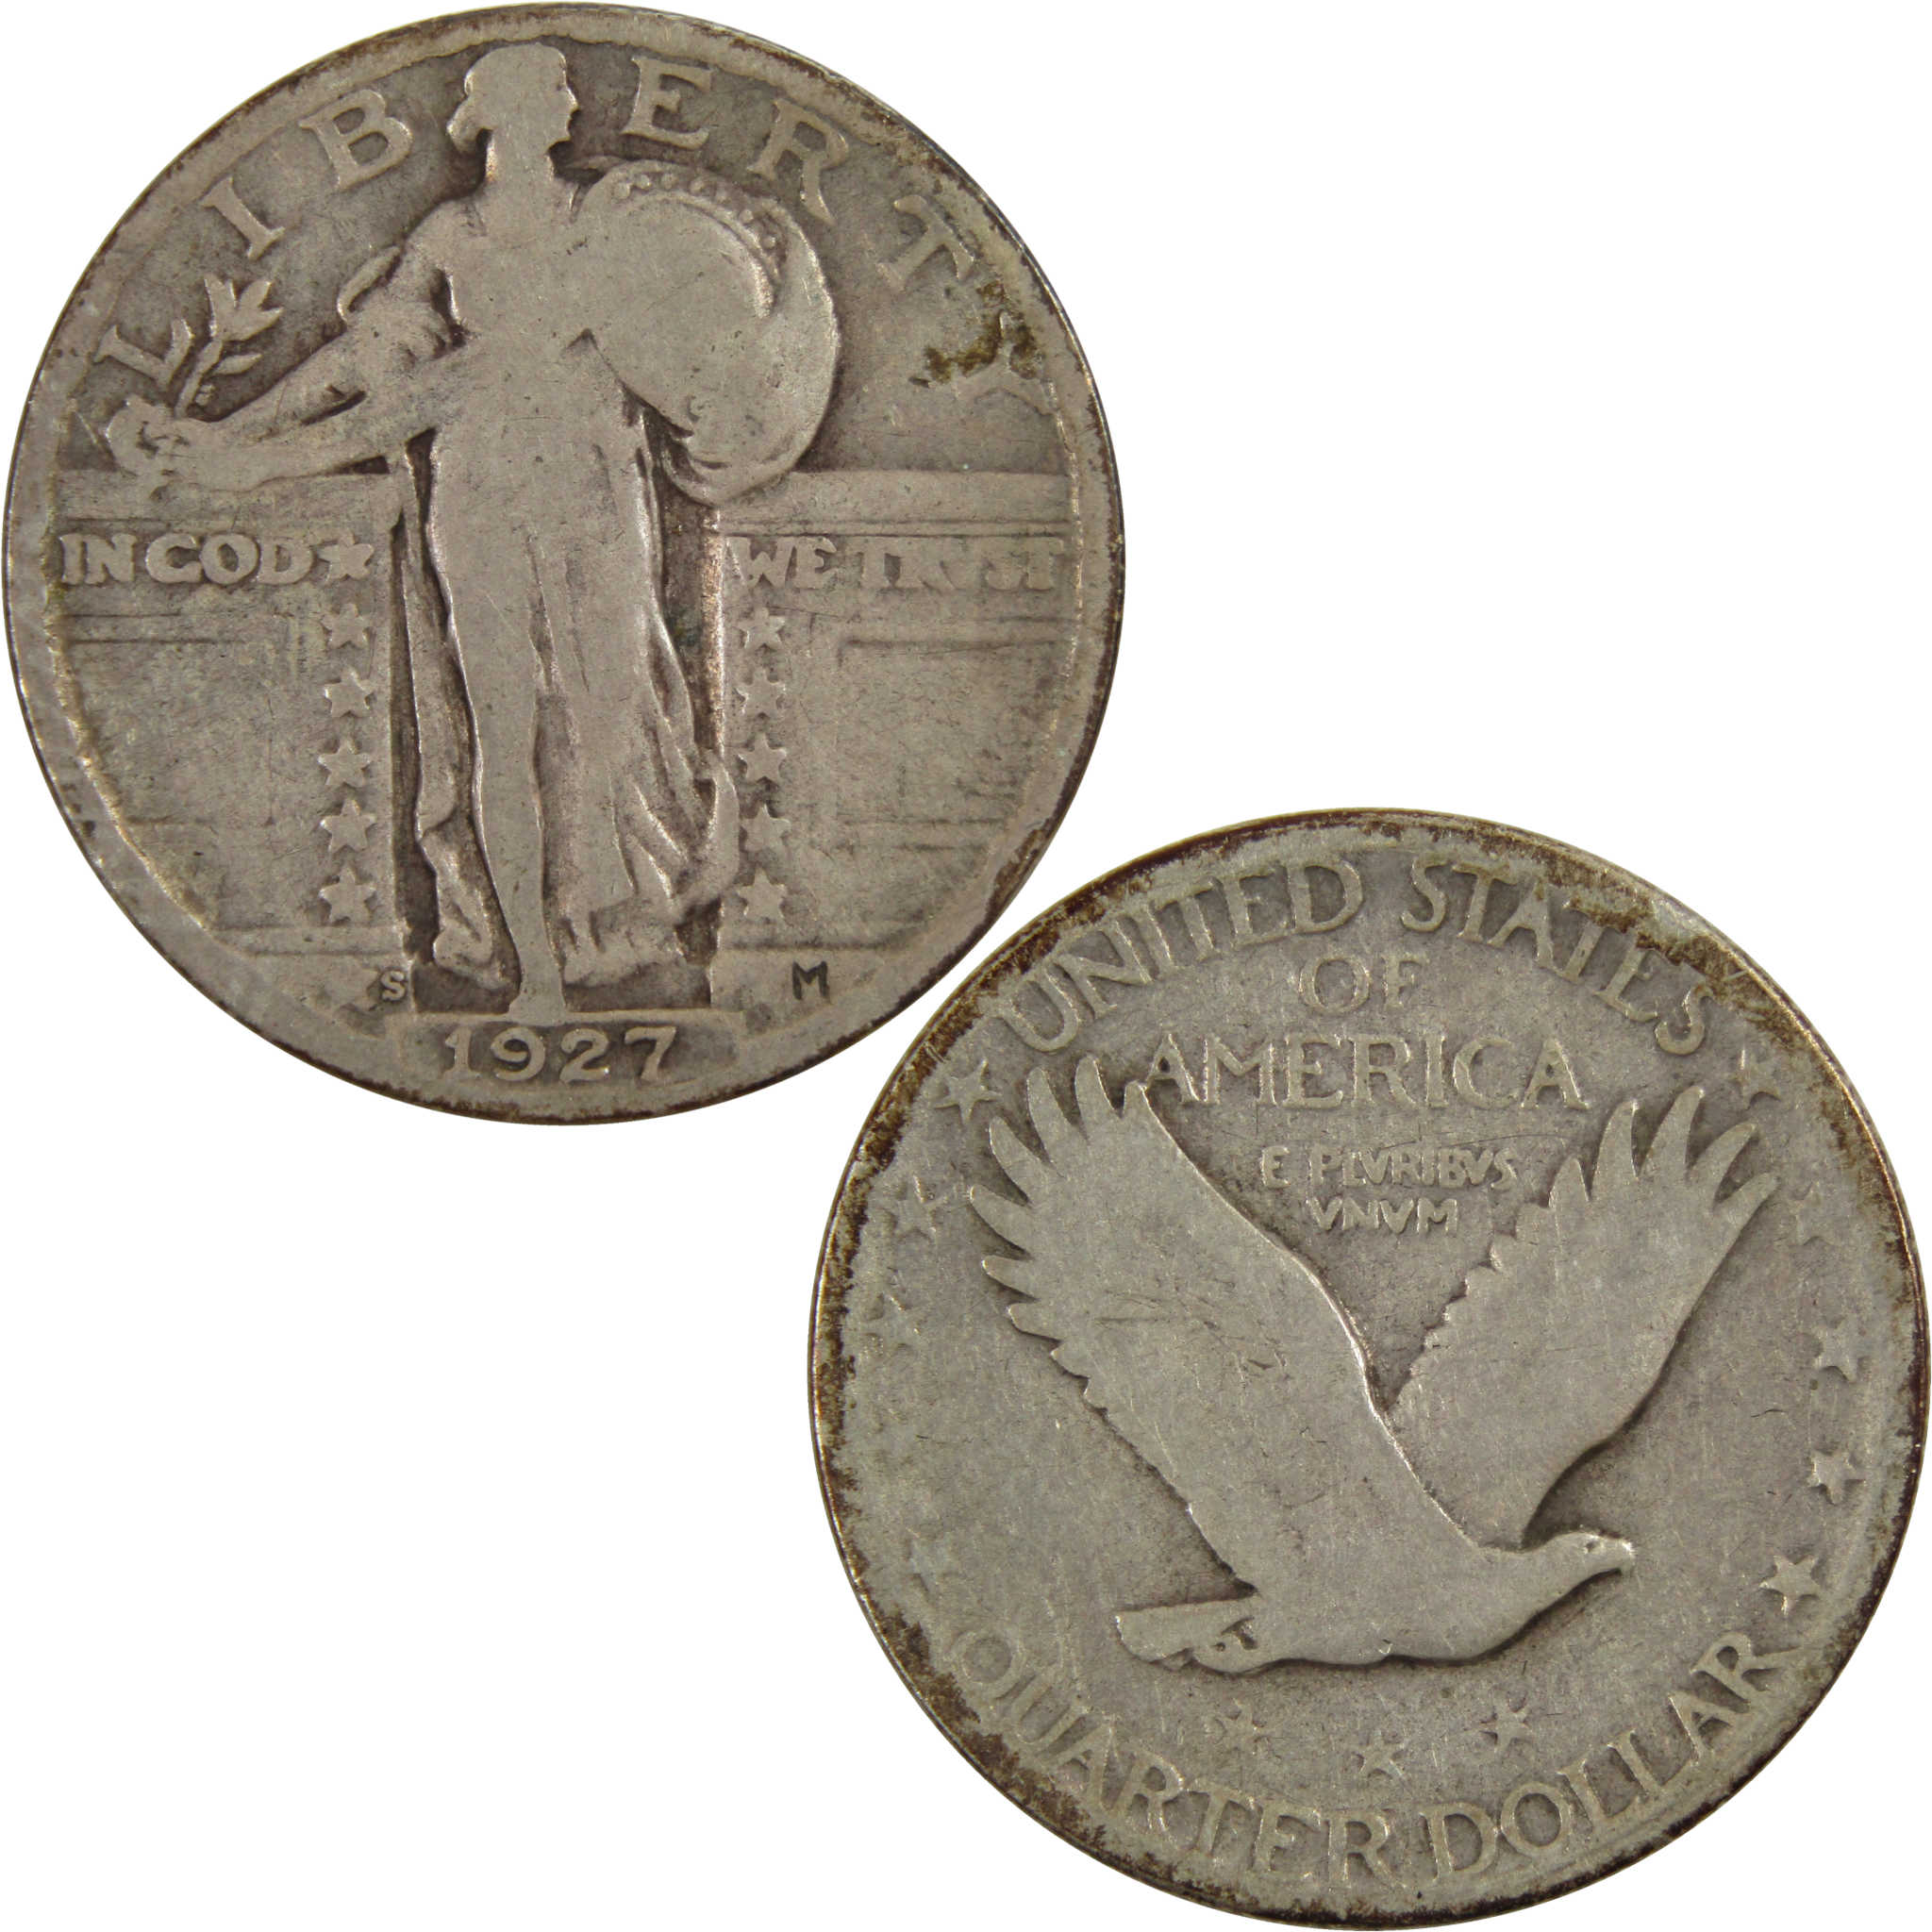 1927 S Standing Liberty Quarter VG Very Good 90% Silver 25c Coin SKU:I8150